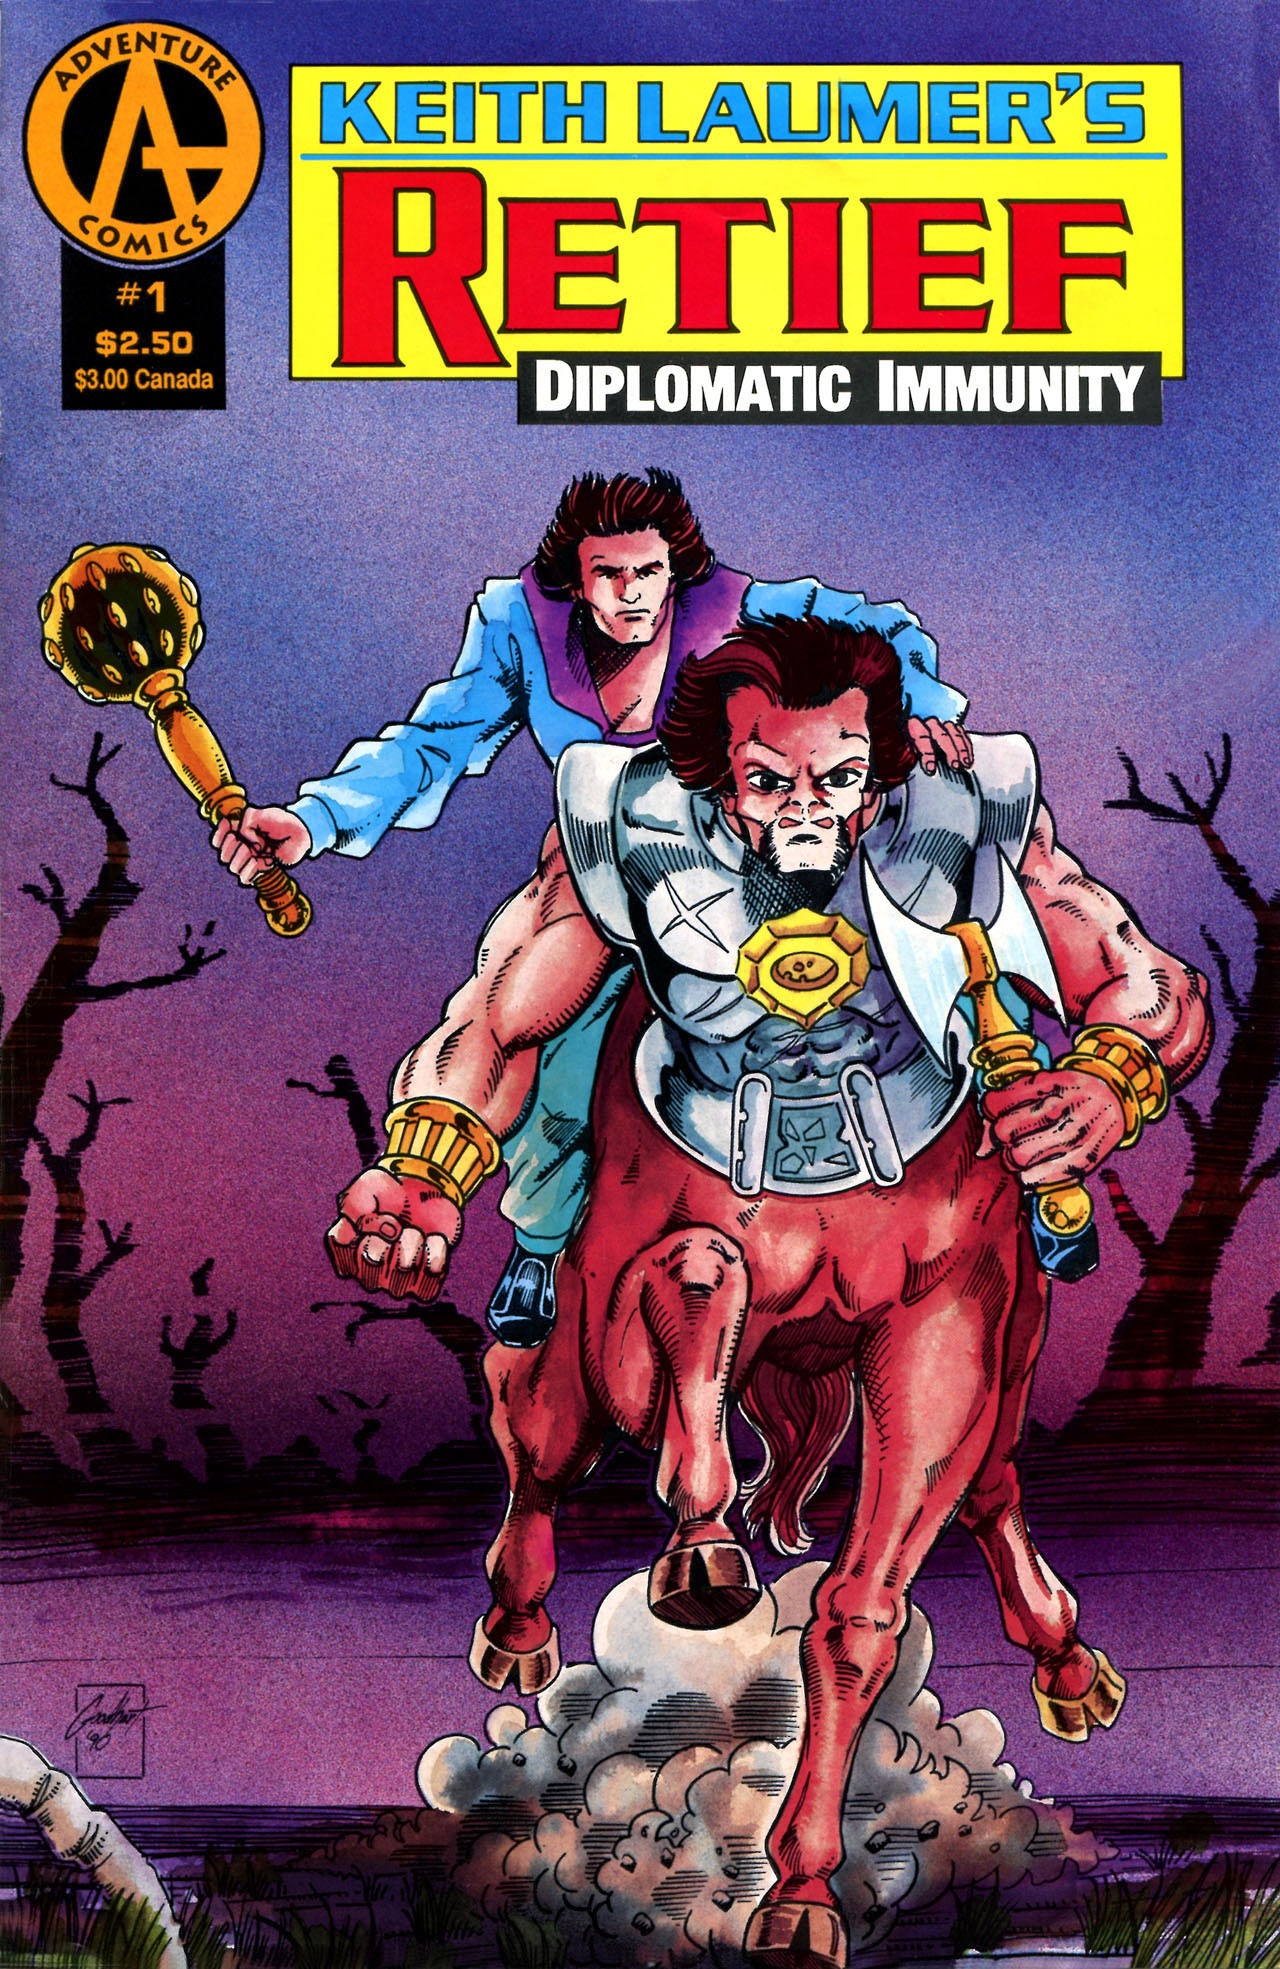 Read online Retief: Diplomatic Immunity comic -  Issue #1 - 1